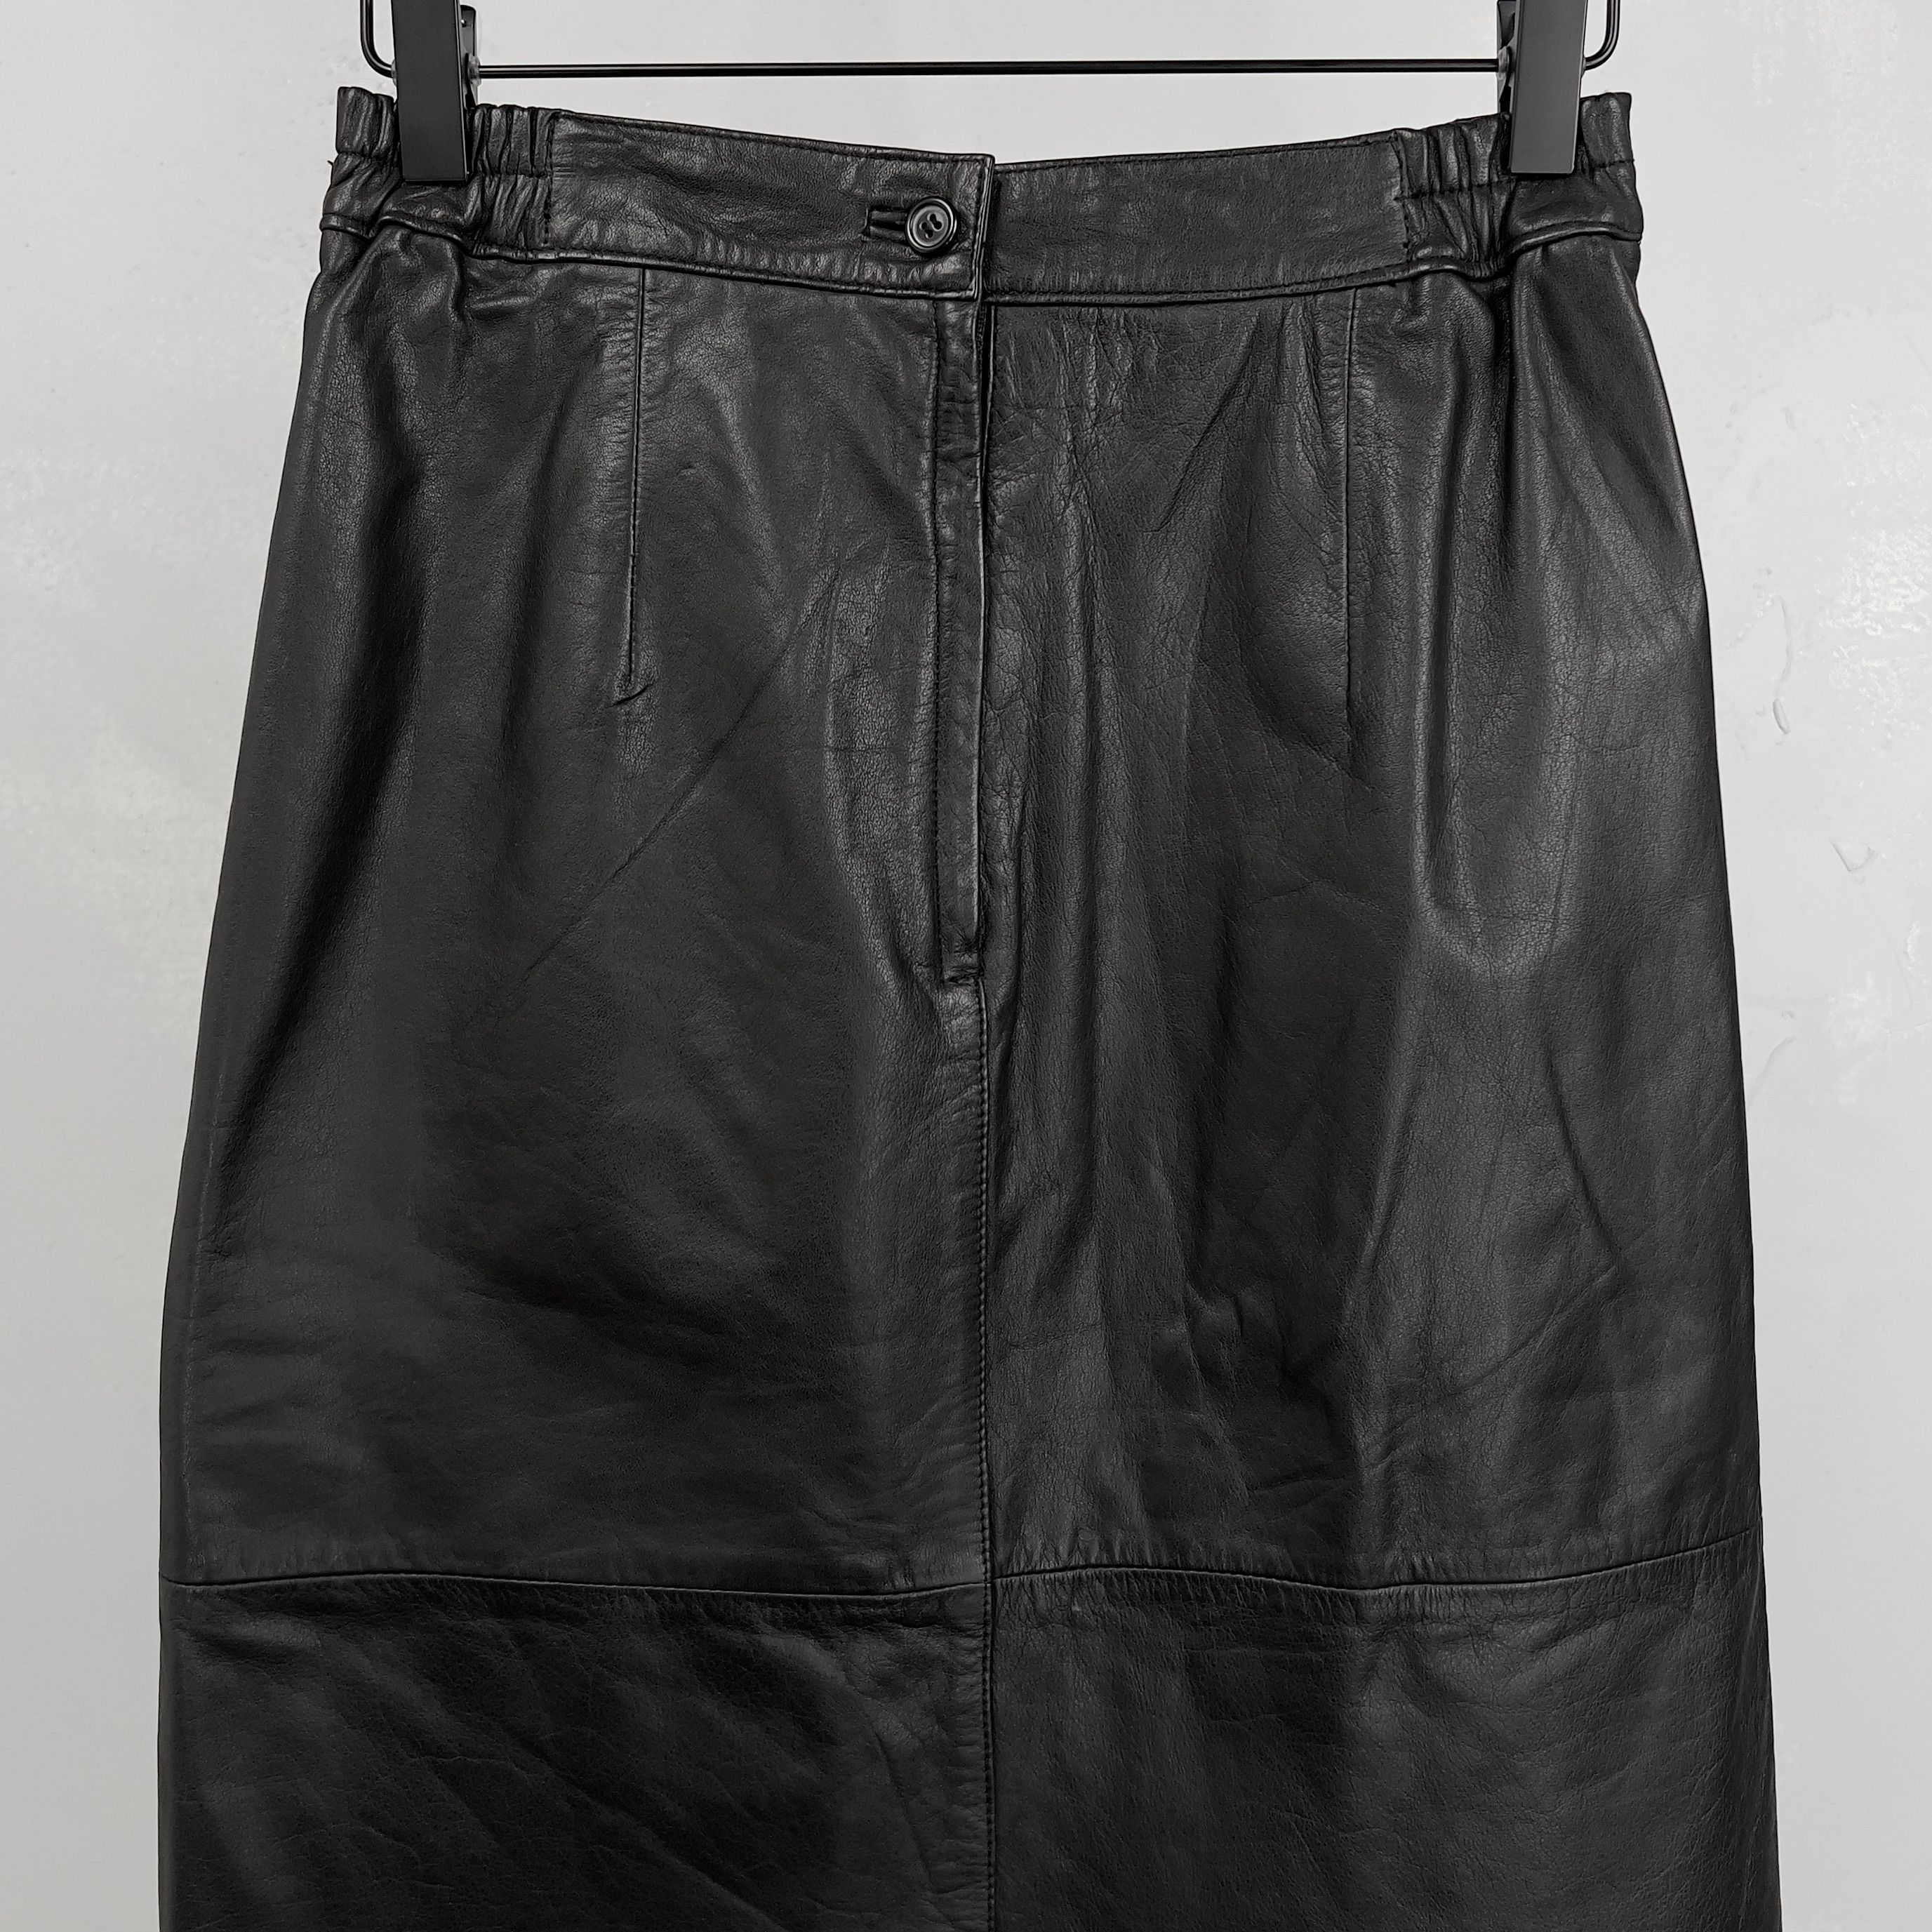 Vintage Vintage 1980s Switzer's Black Genuine Leather Skirt Size 26" / US 2 / IT 38 - 3 Thumbnail